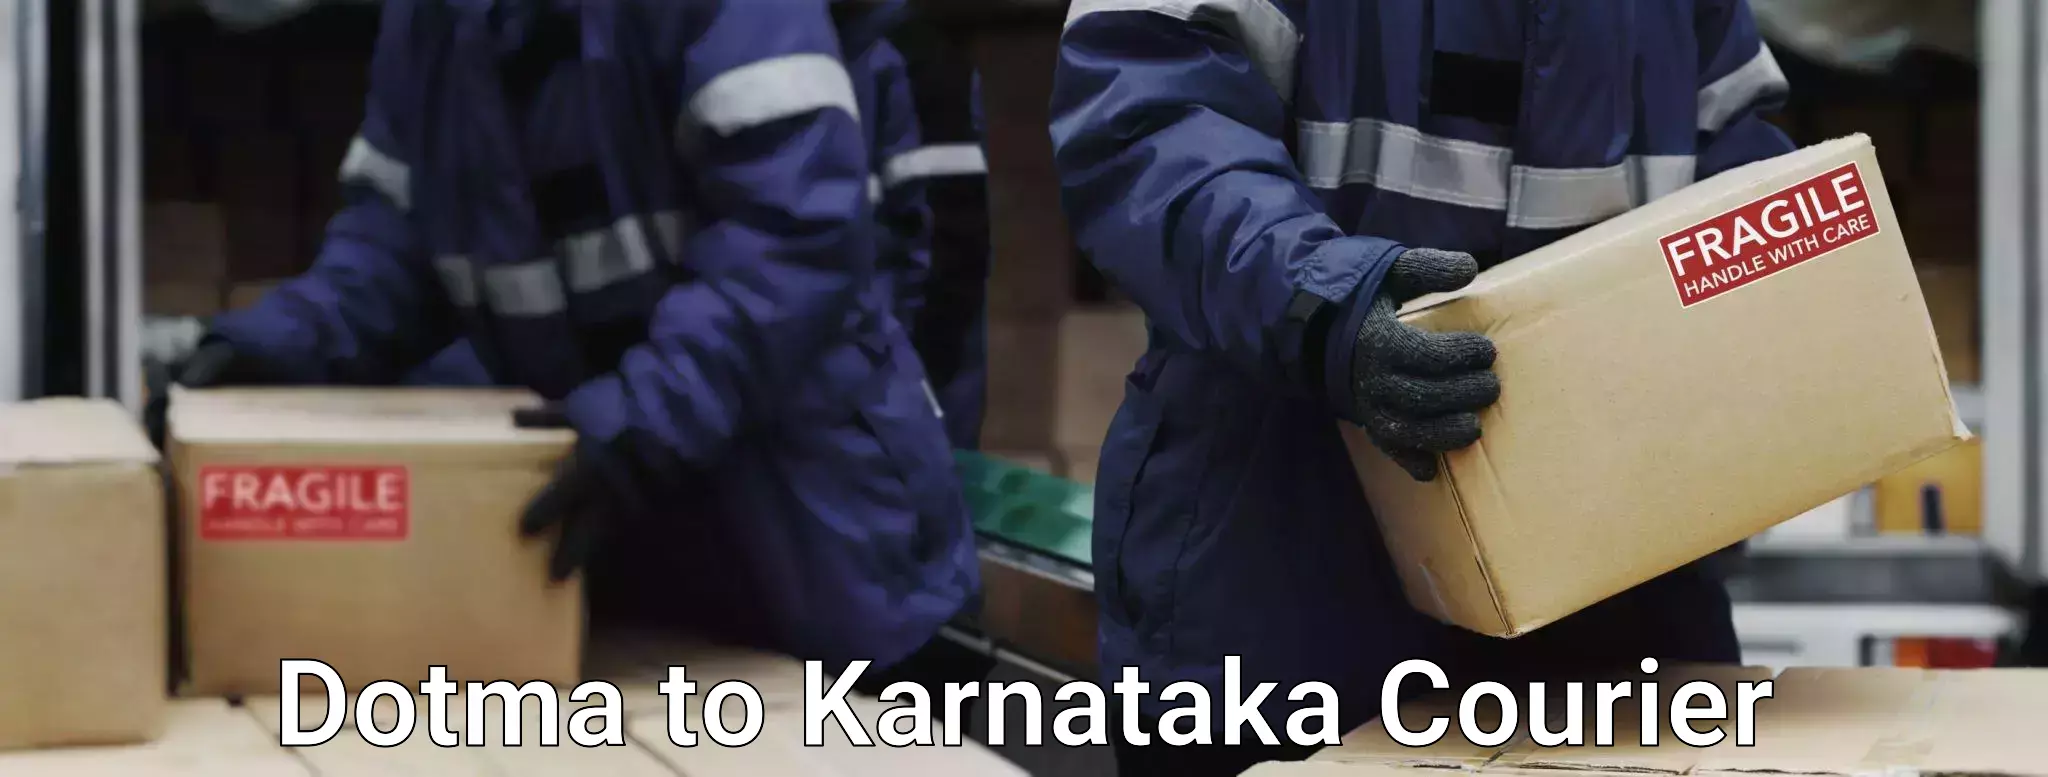 Luggage shipping service Dotma to Karnataka